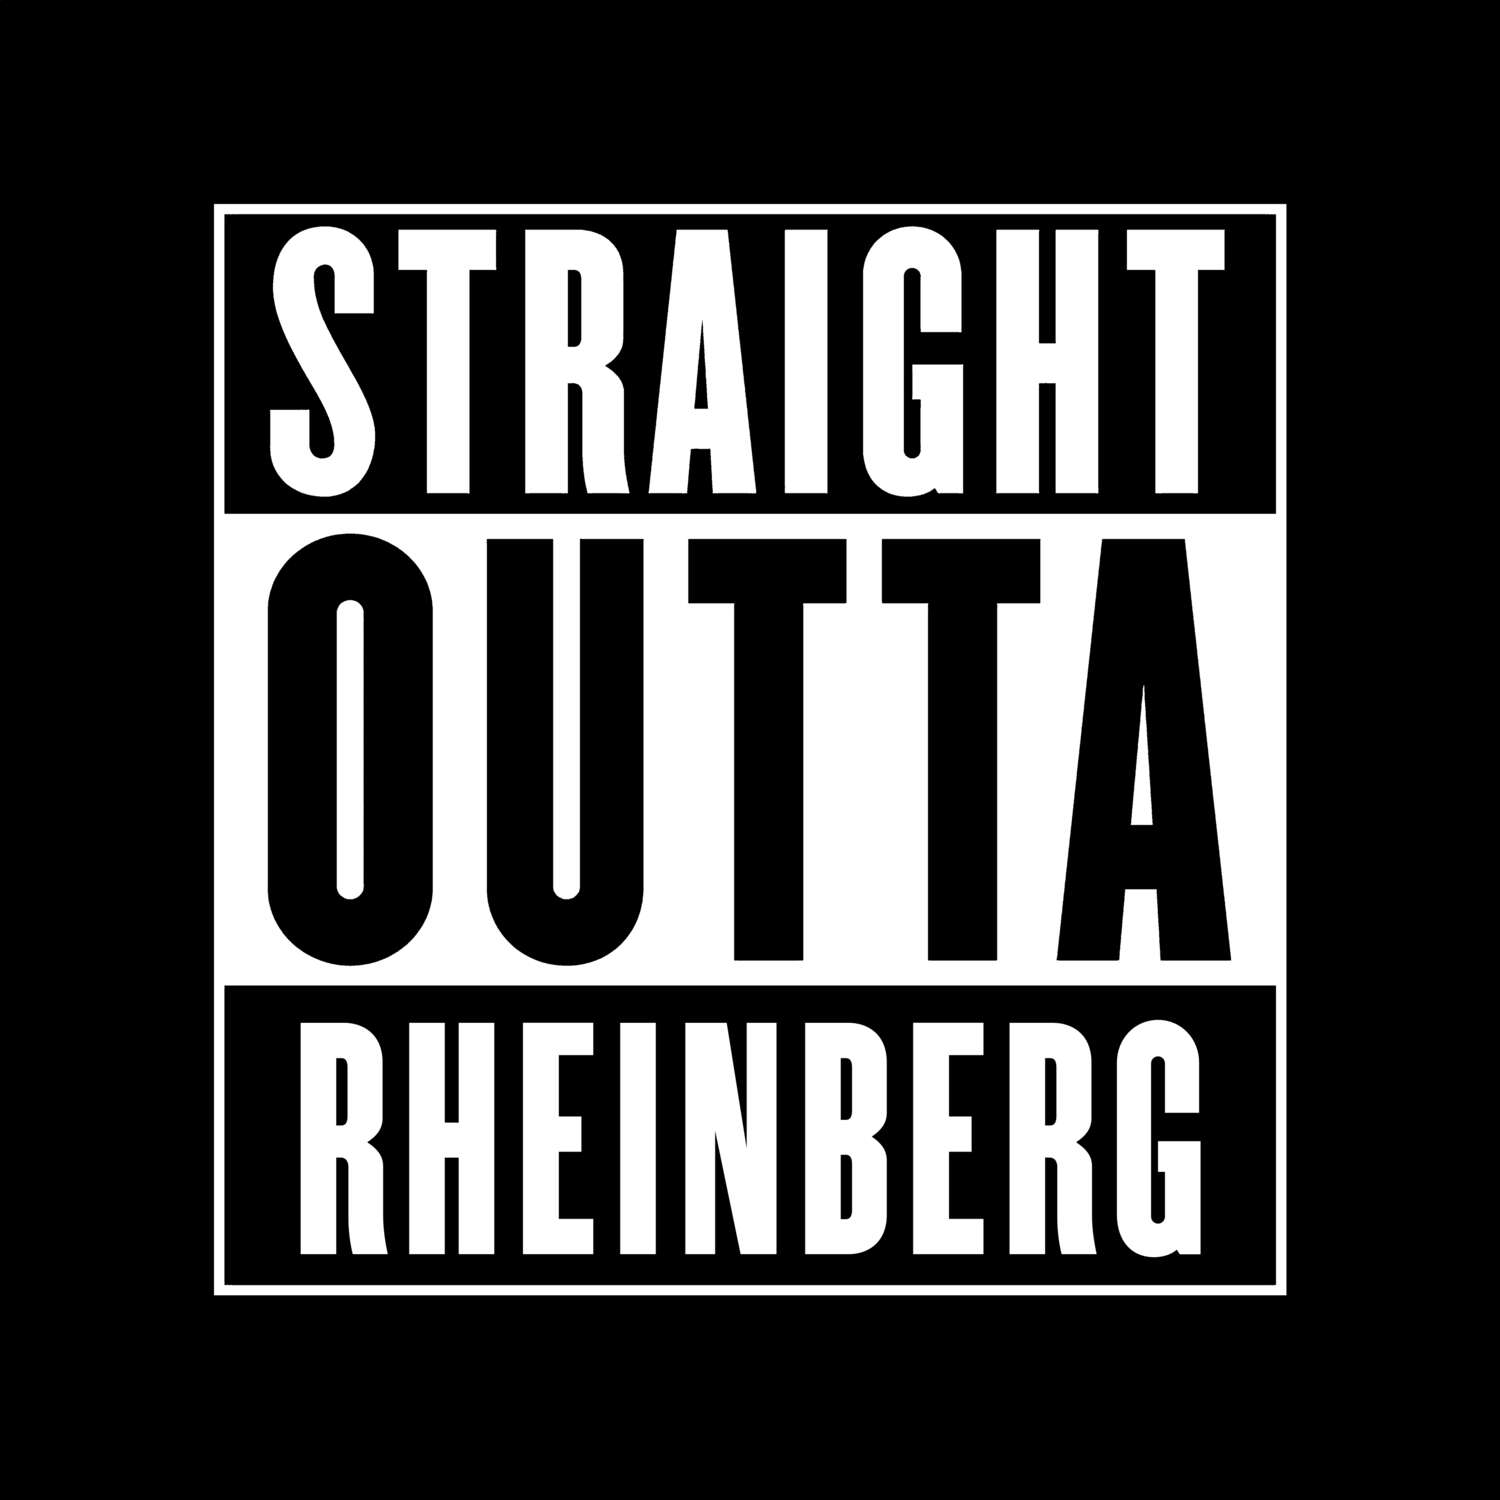 Rheinberg T-Shirt »Straight Outta«